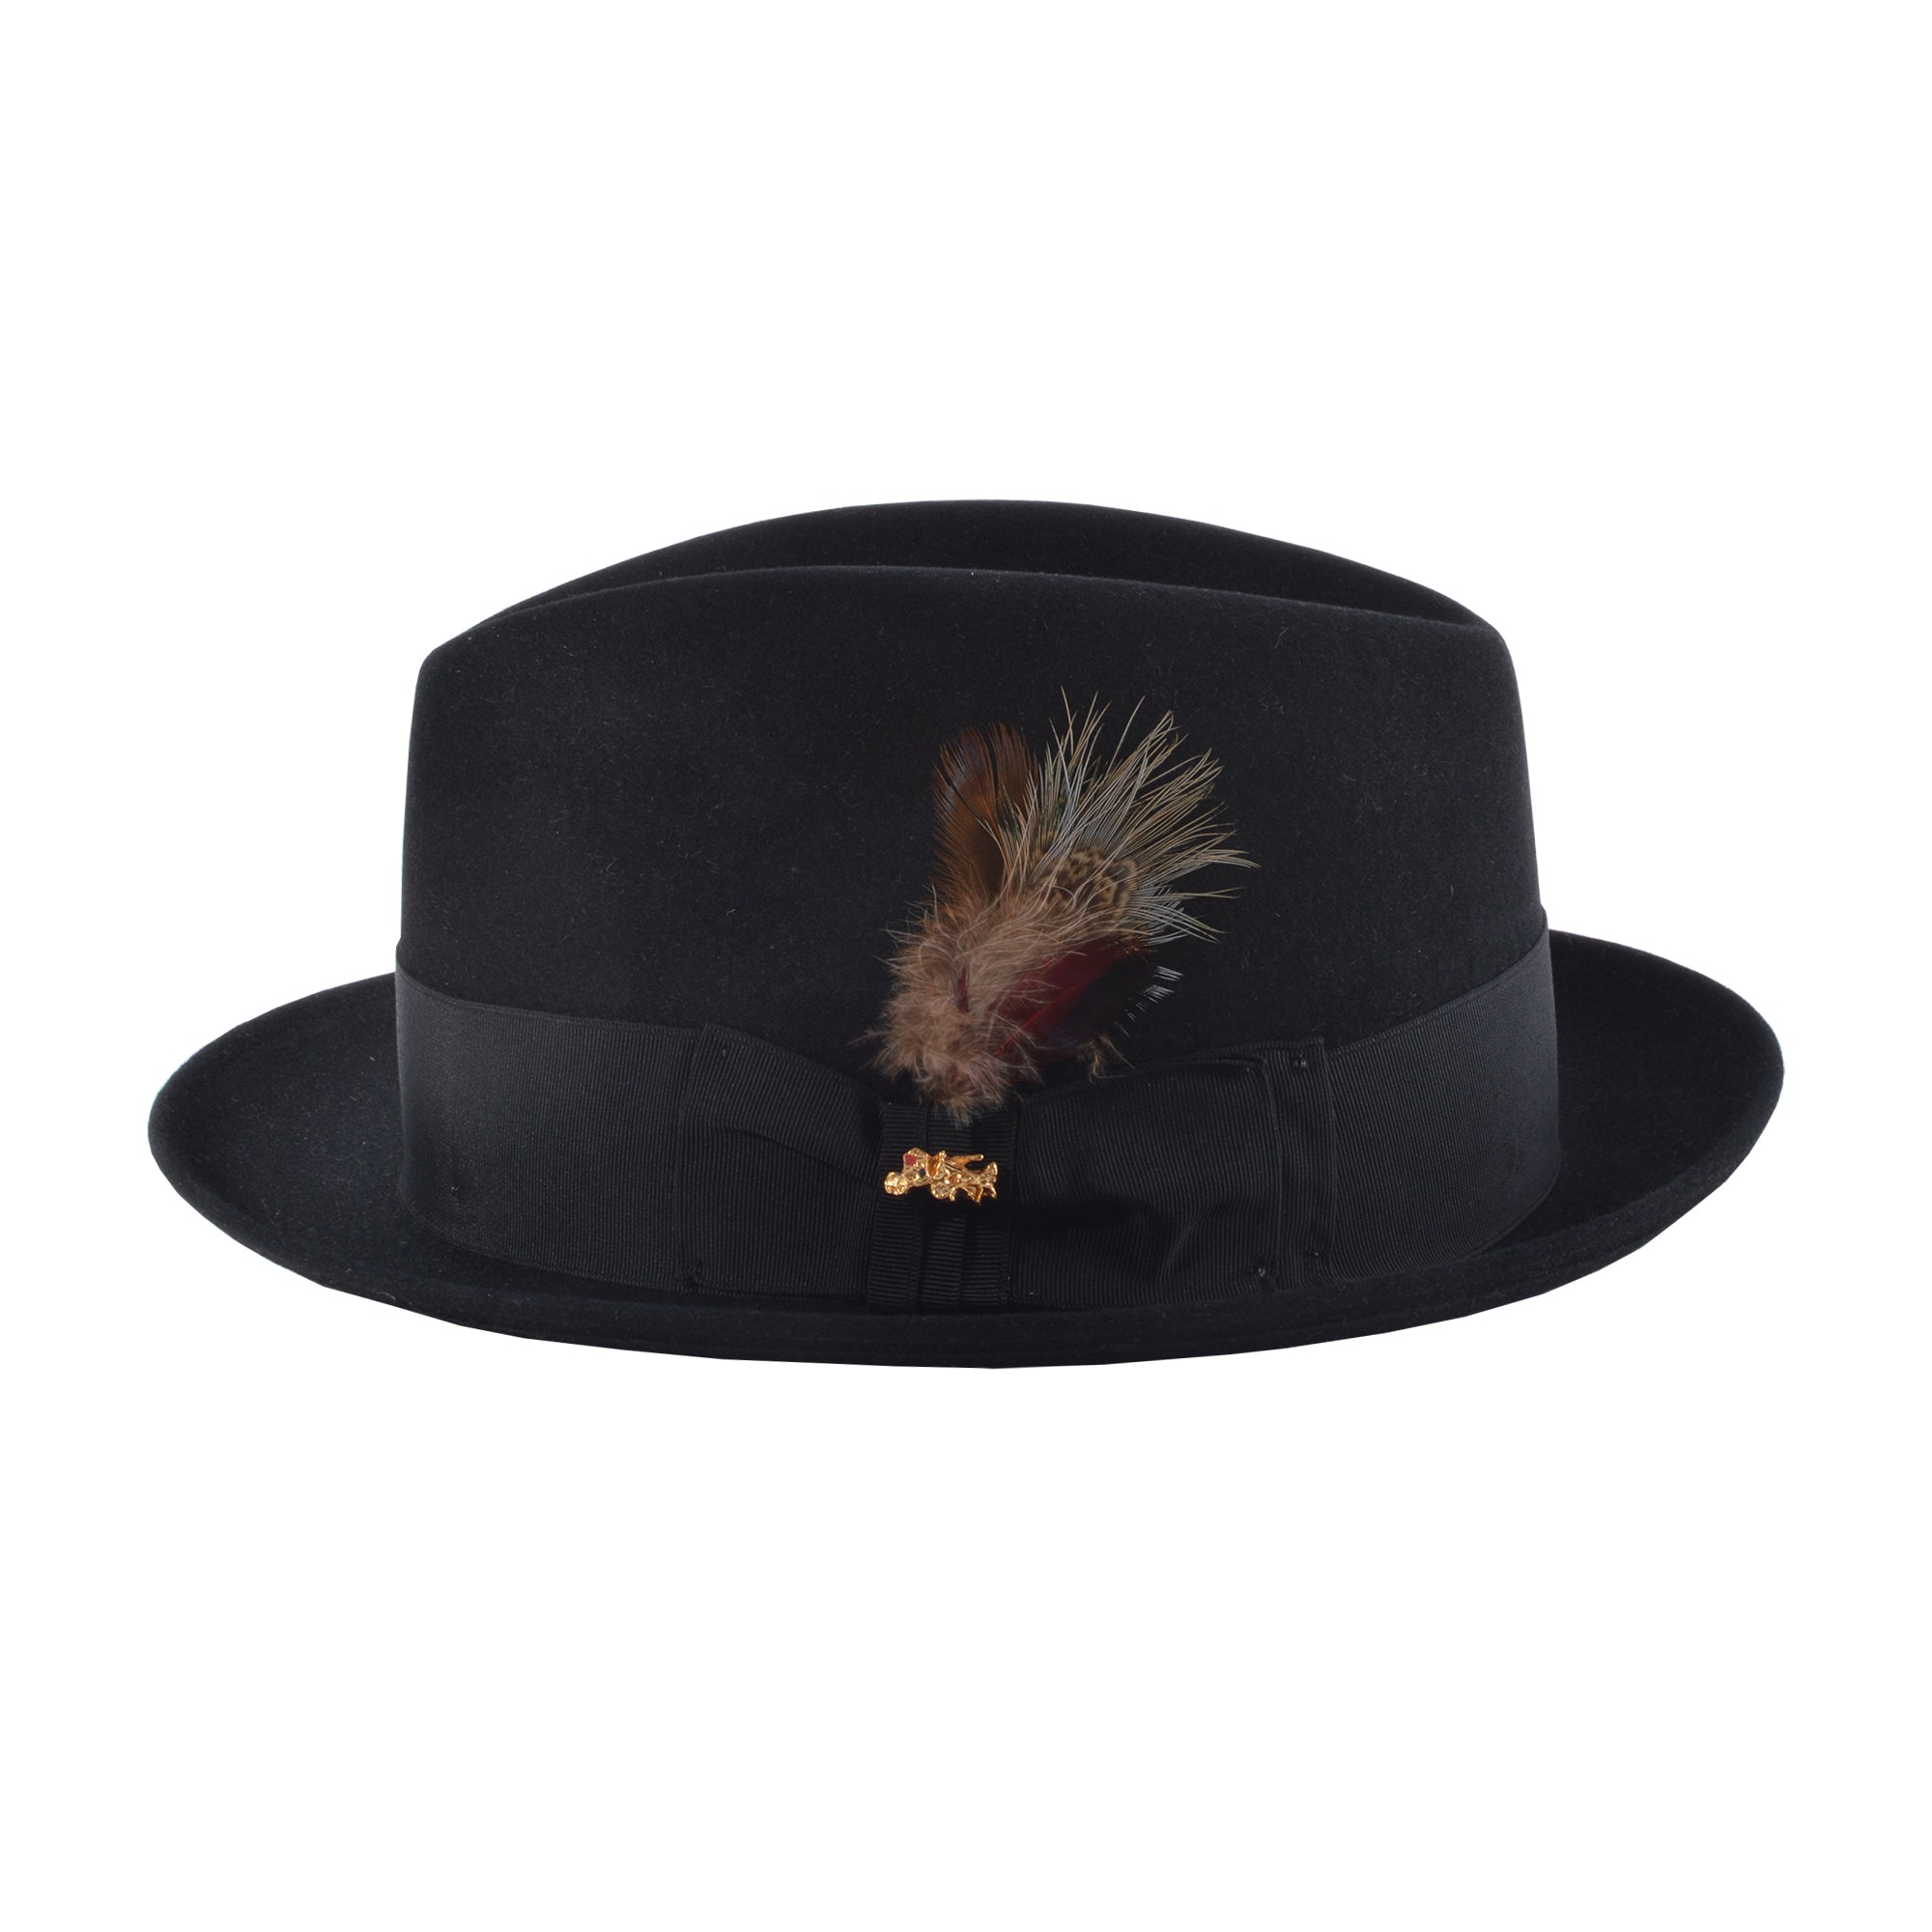 Dobbs Jet 707 Fur Felt Fedora Hat with Hat Box